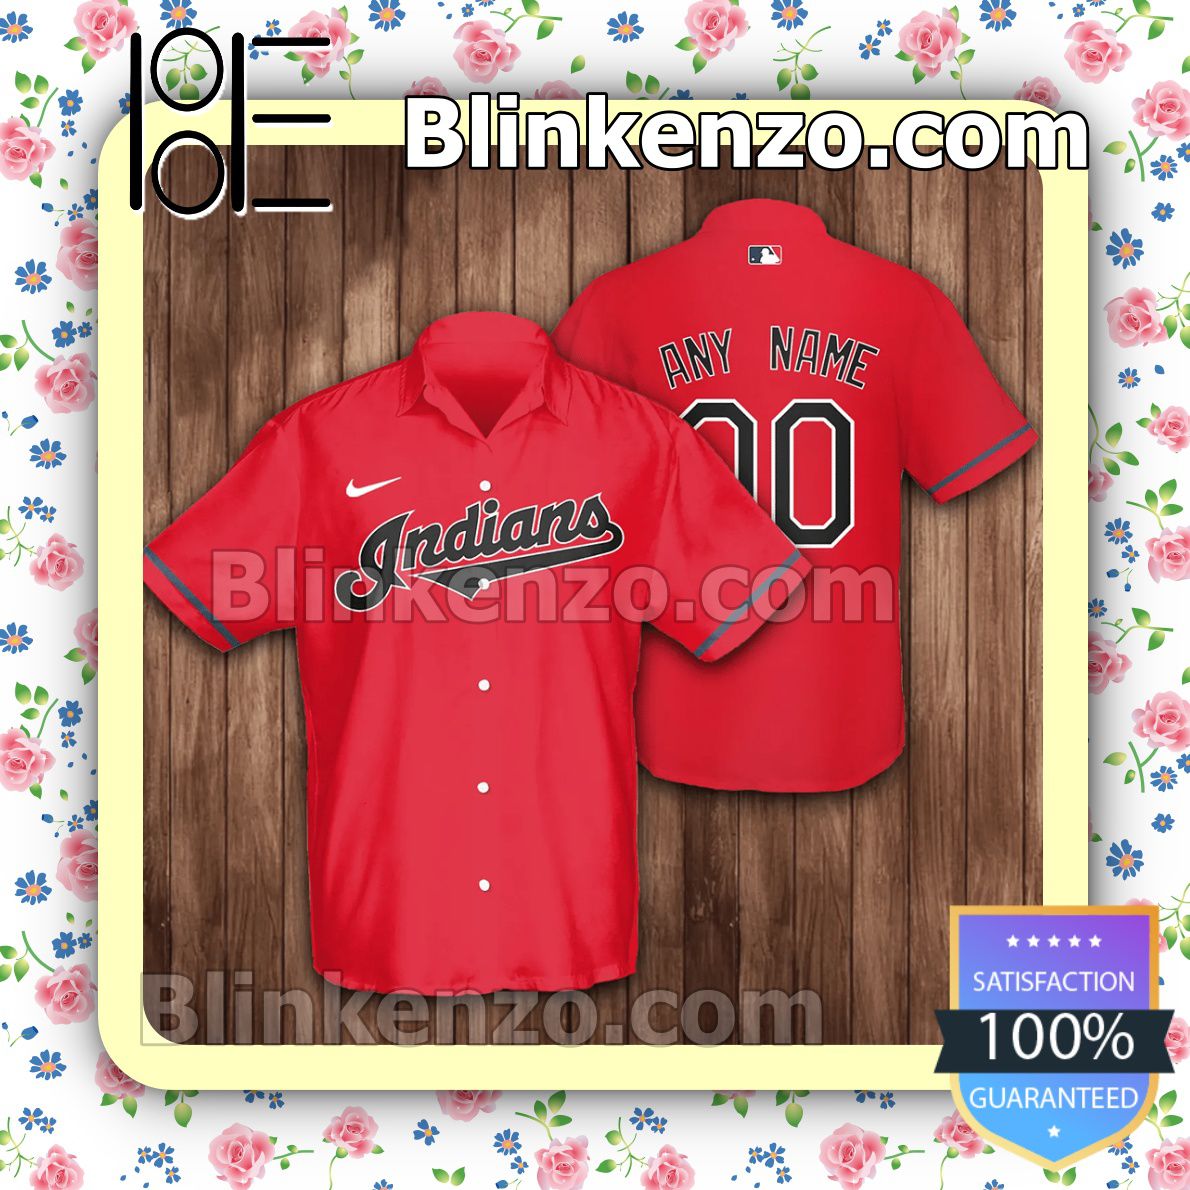 Cleveland Indians MLB Summer 3D Hawaiian Shirt Gift For Men And Women Fans  - Freedomdesign